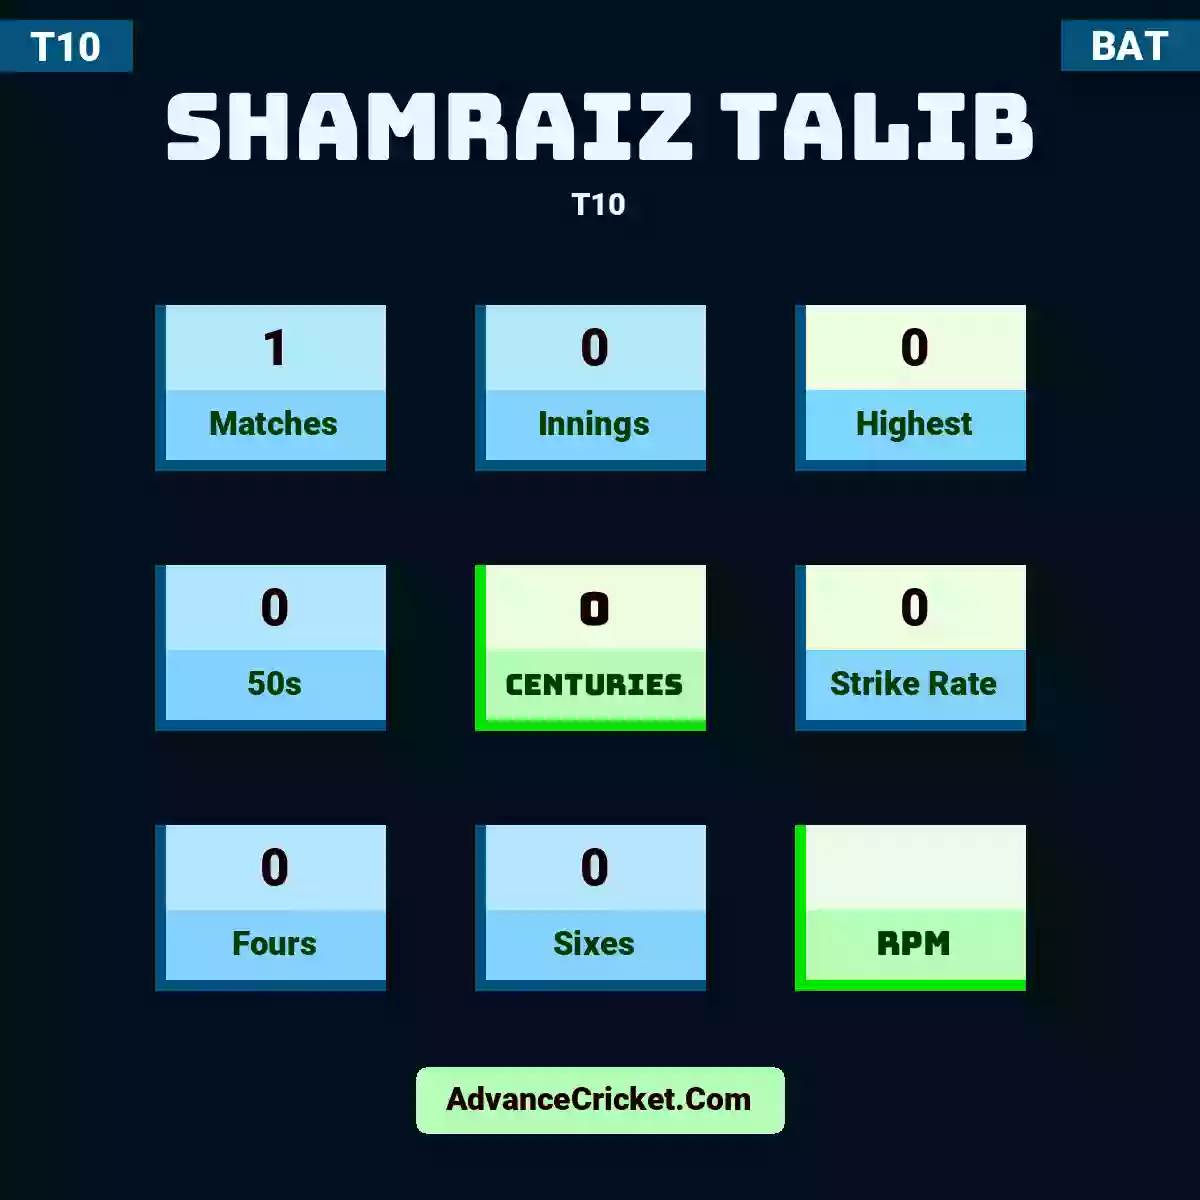 Shamraiz Talib T10 , Shamraiz Talib played 1 matches, scored 0 runs as highest, 0 half-centuries, and 0 centuries, with a strike rate of 0. S.Talib hit 0 fours and 0 sixes.